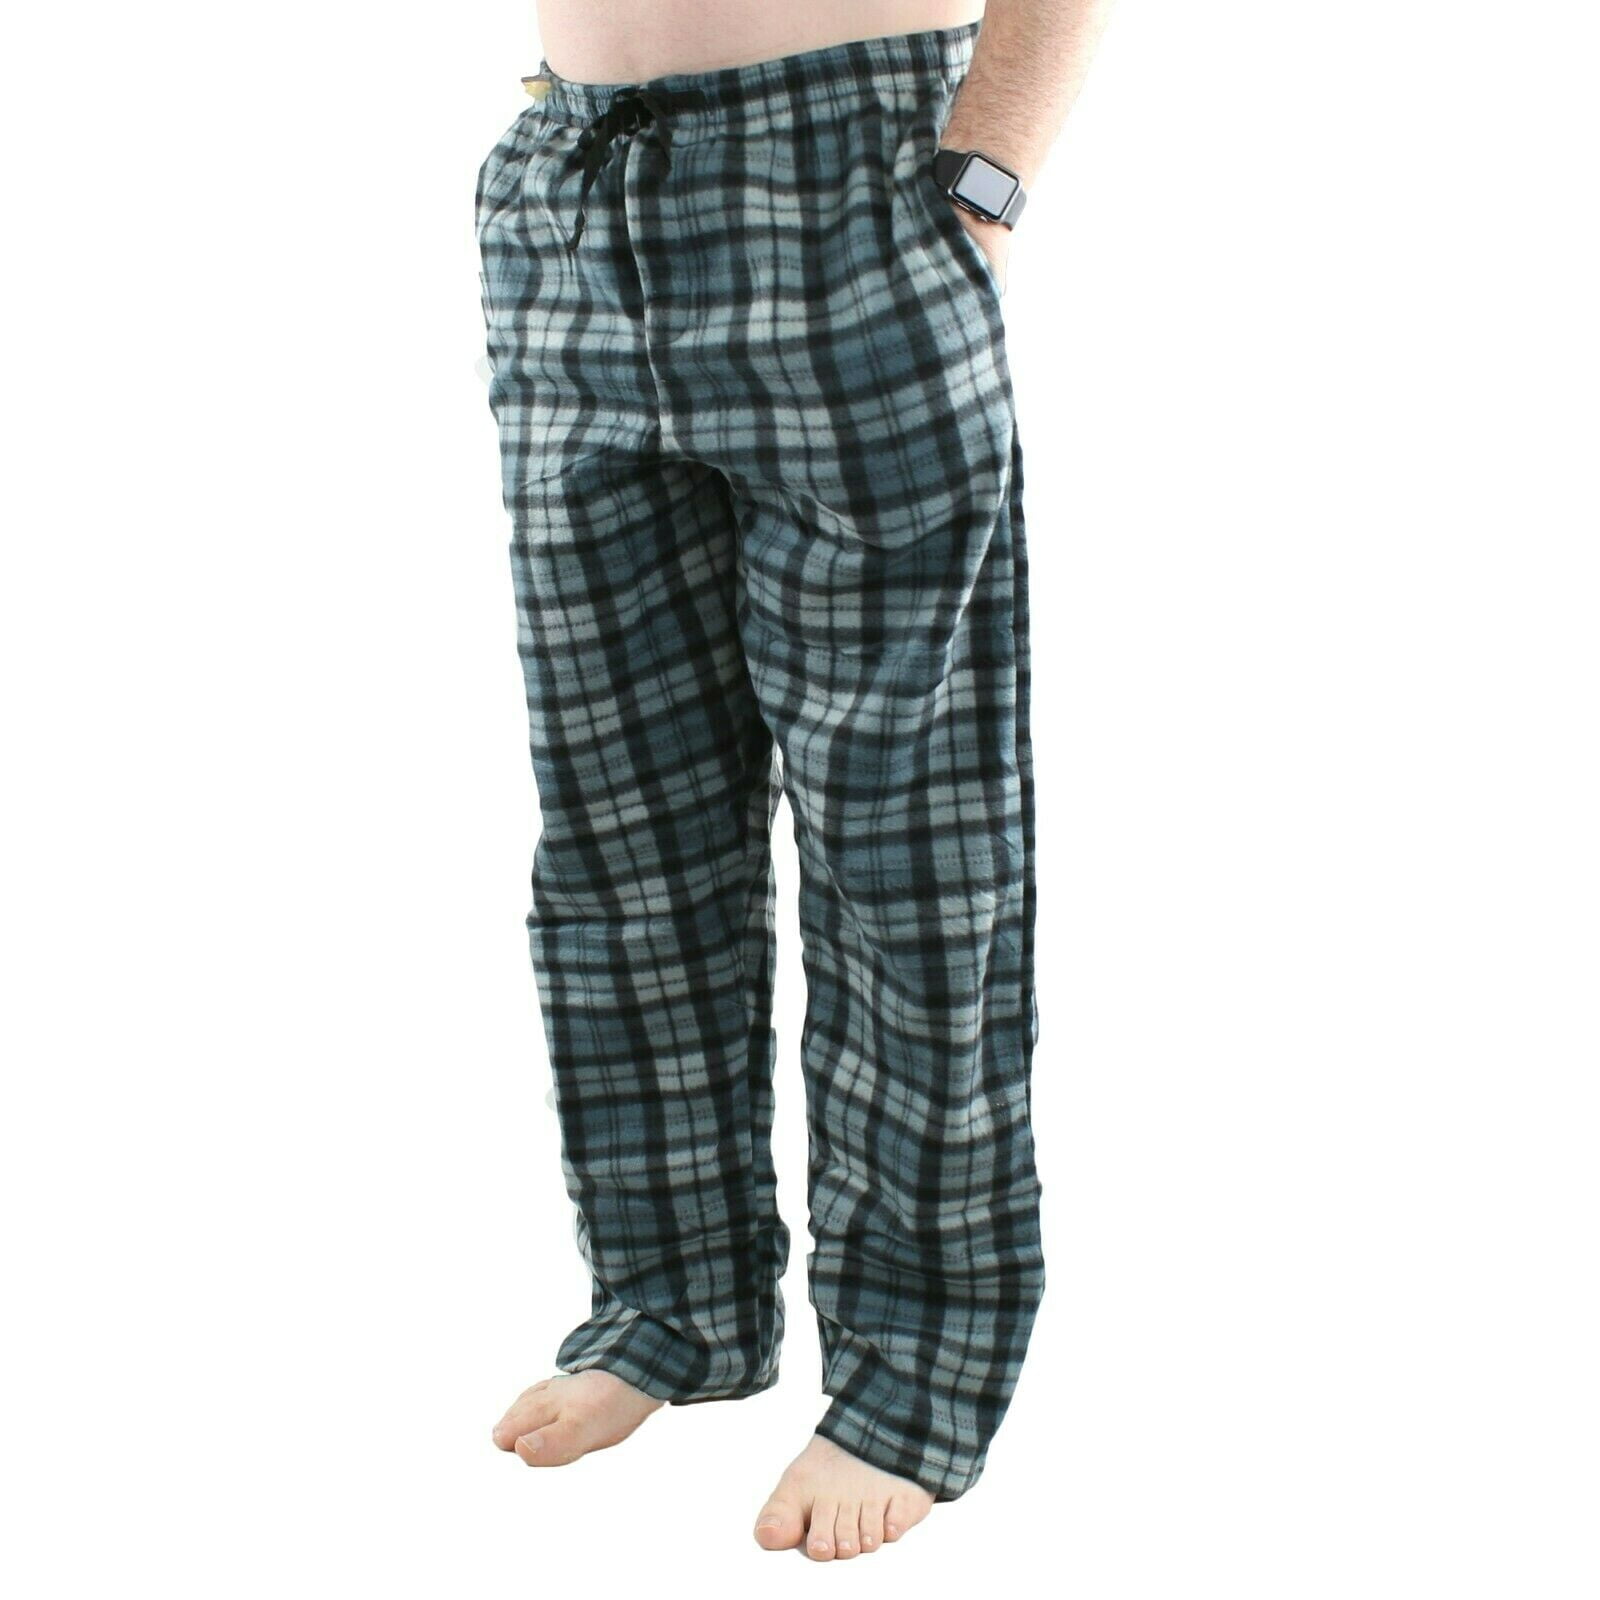 Comfy Lifestyle Men's Fleece Plaid Pajama Pants, Soft and Cozy